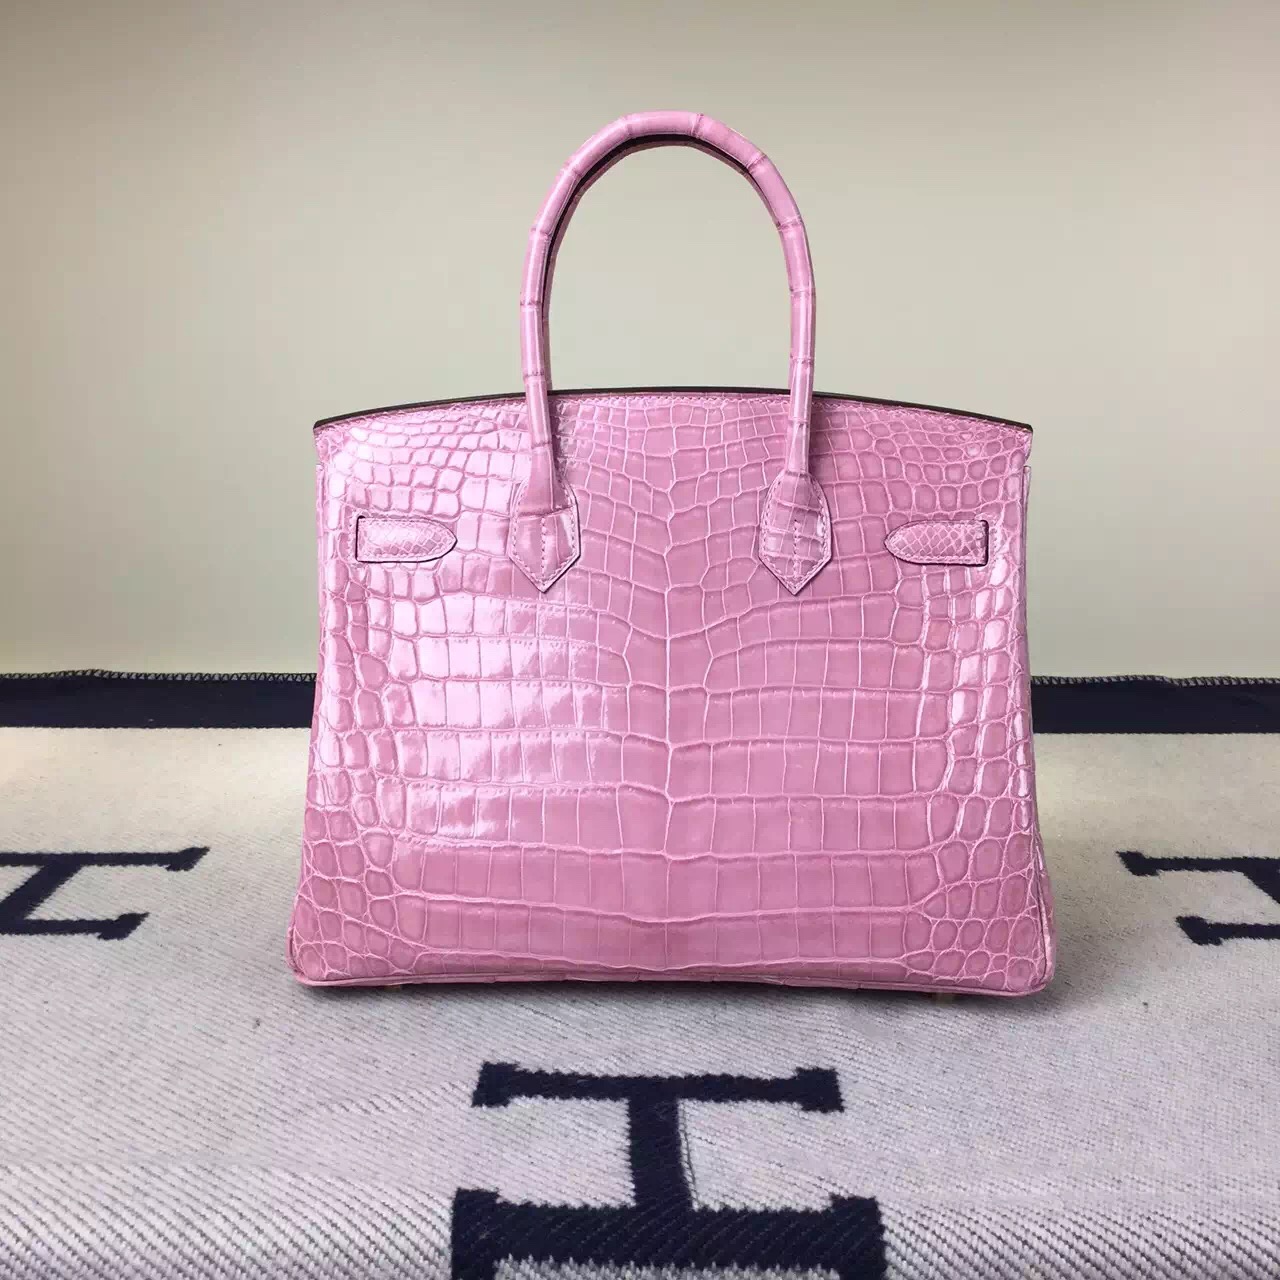 New Pretty Hermes Light Pink Crocodile Shiny Leather Birkin Bag 30cm